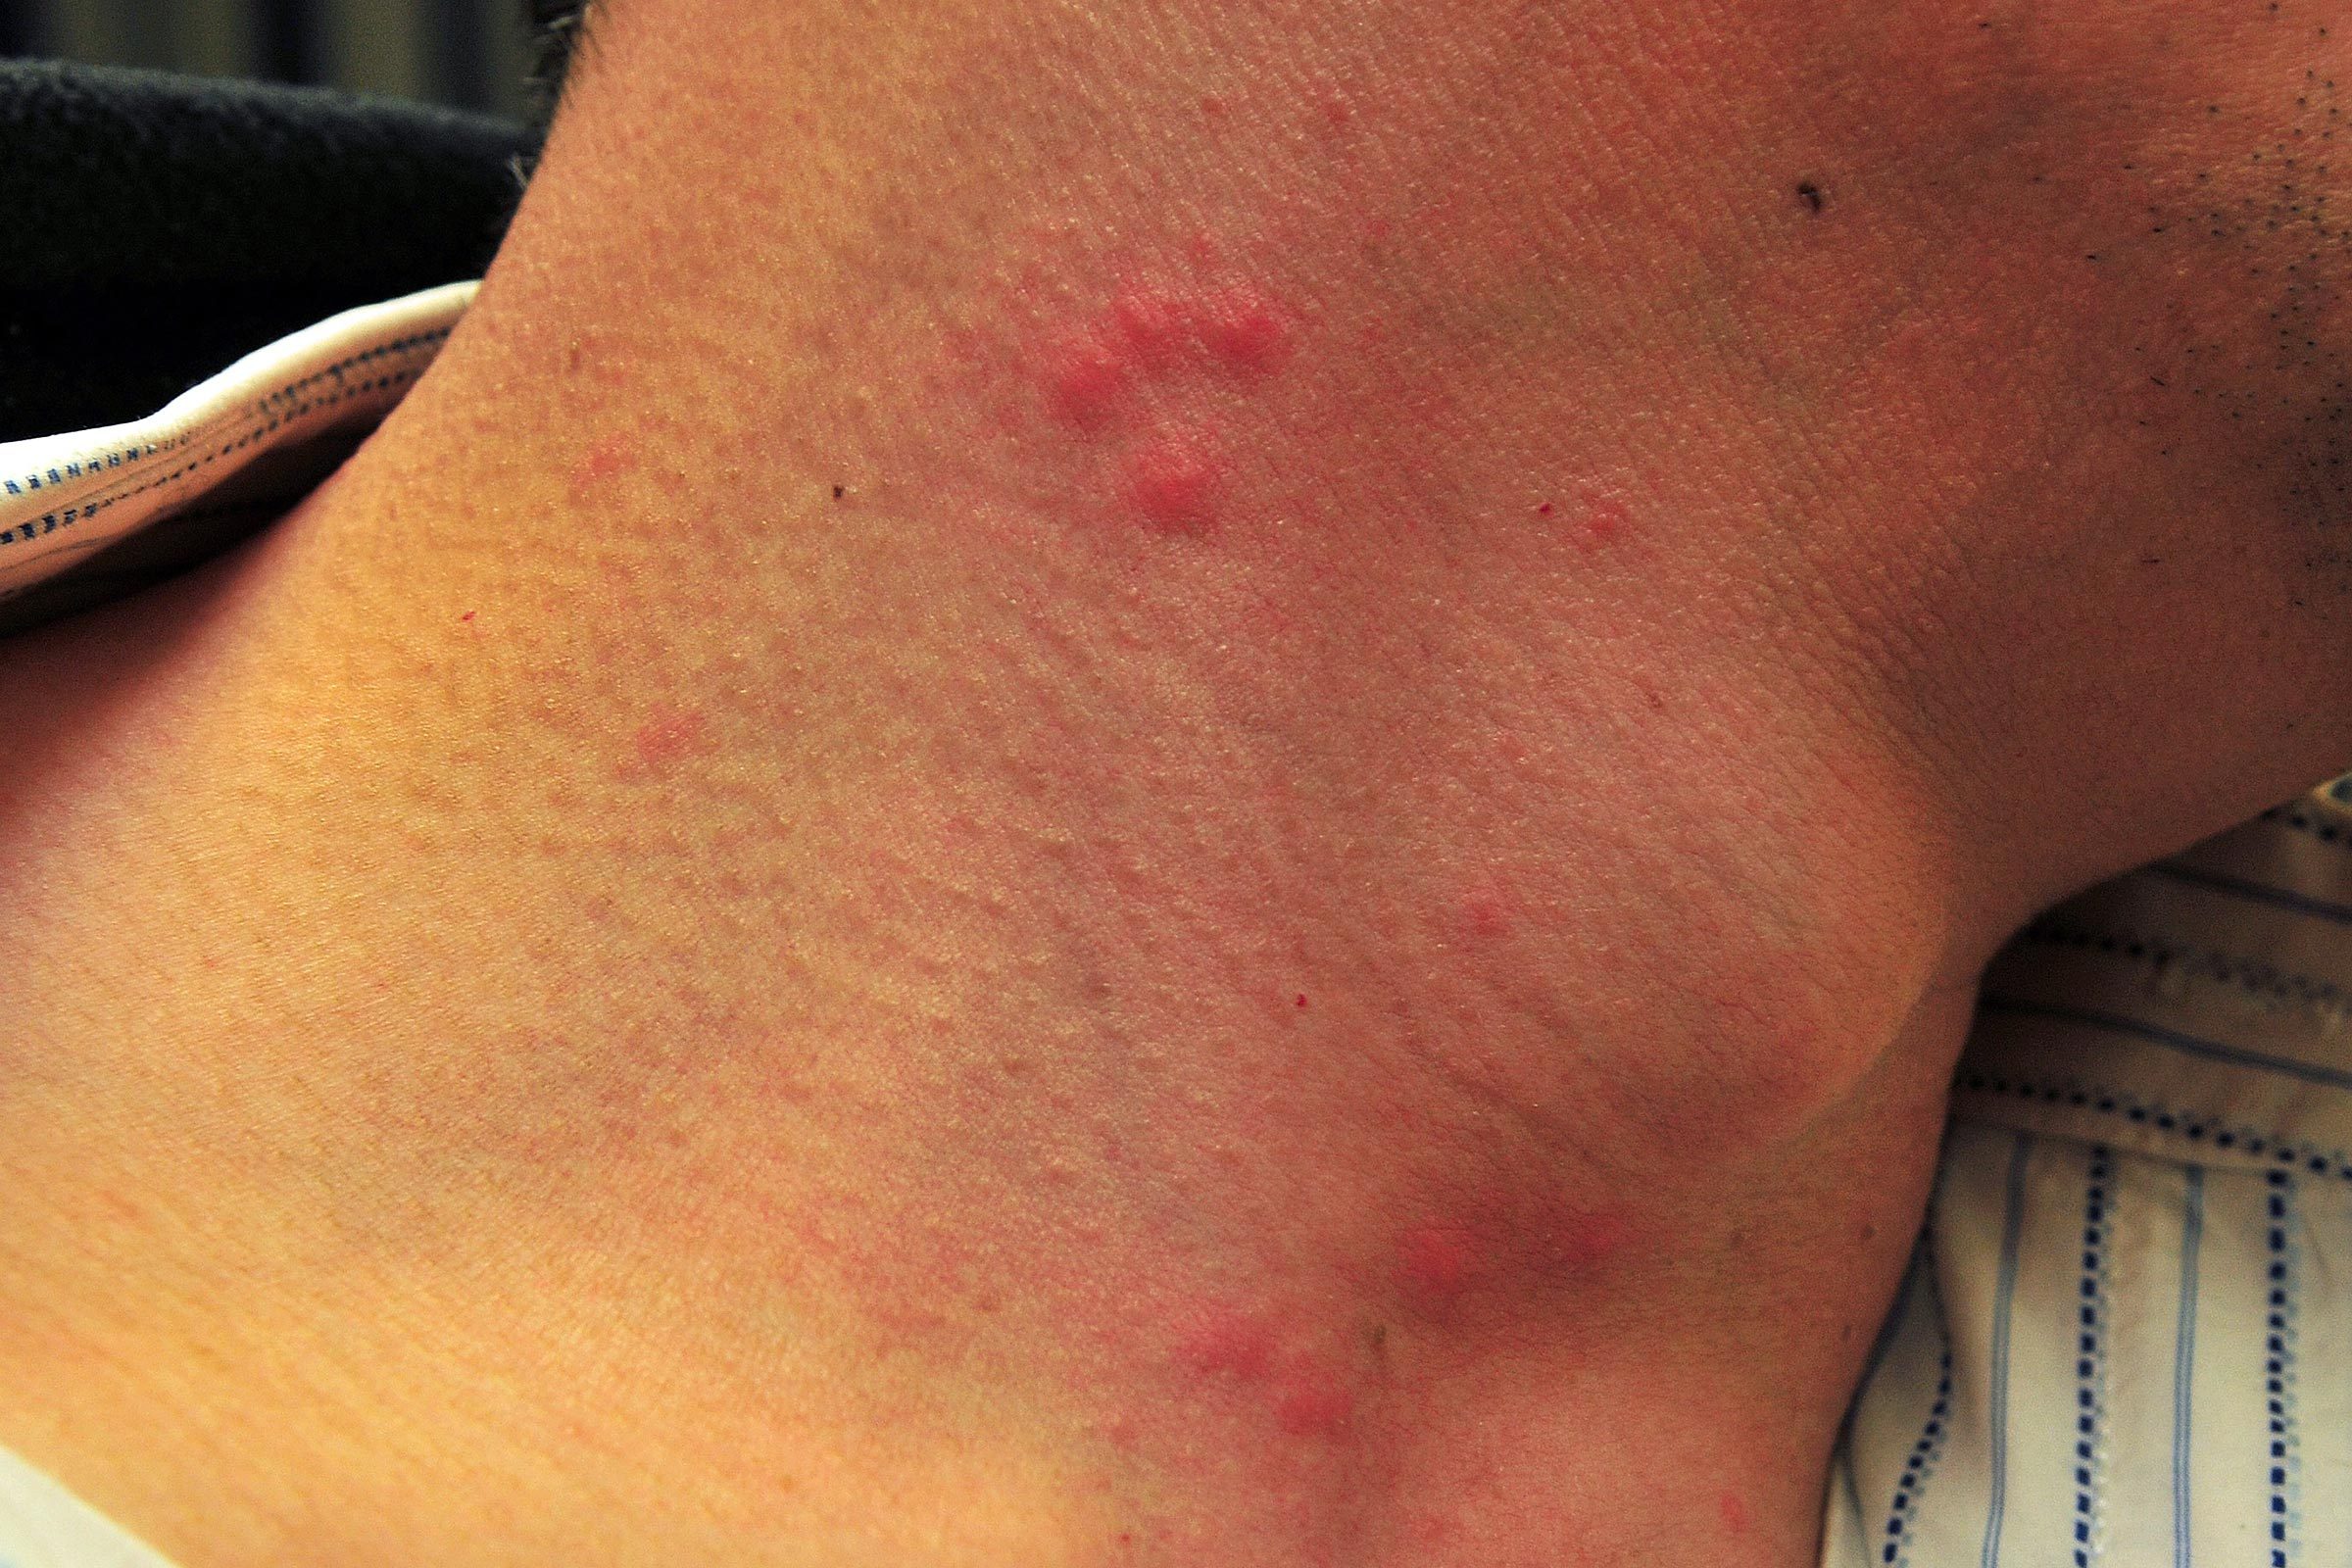 mattress mild bites day 2 bed bugs